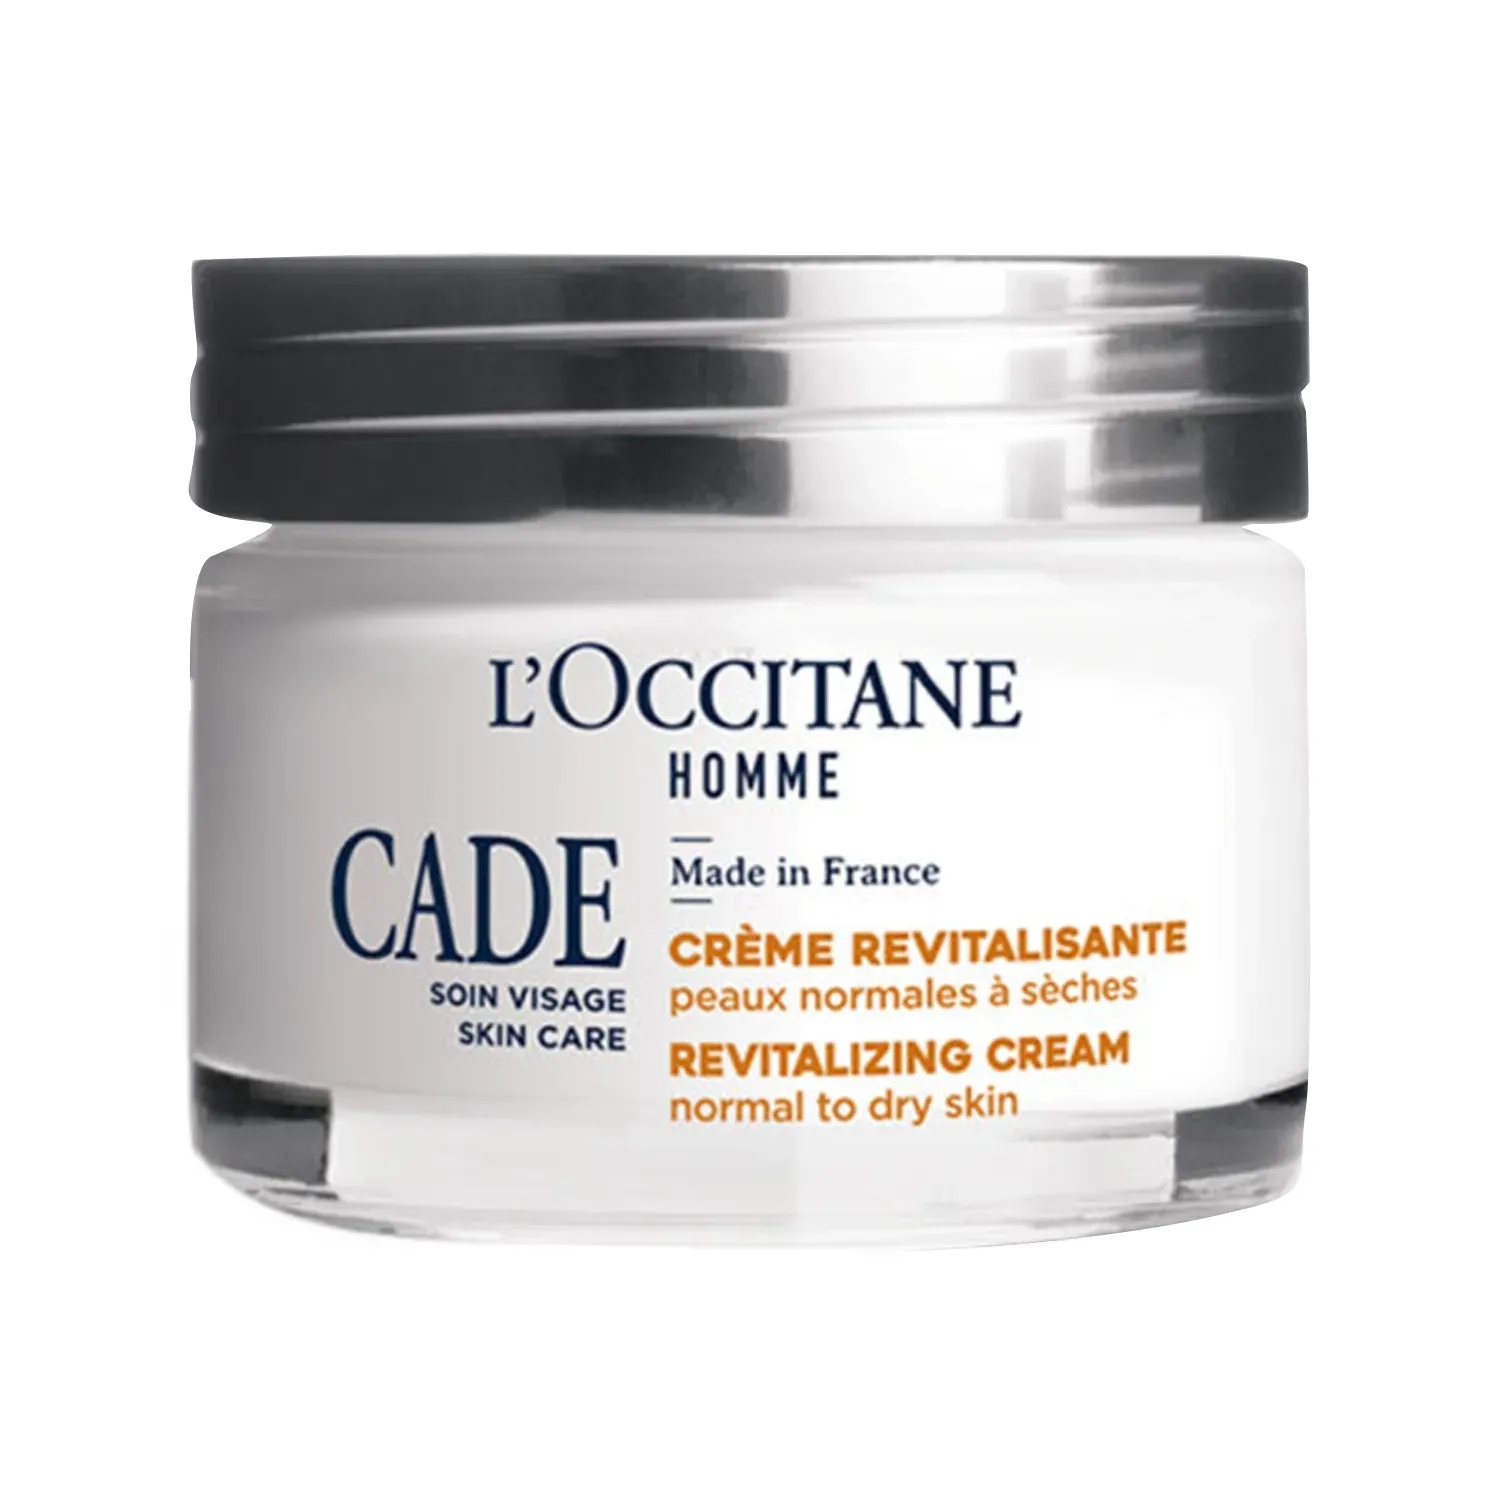 L'occitane | L'occitane Cade Revitalizing Cream - (50ml)